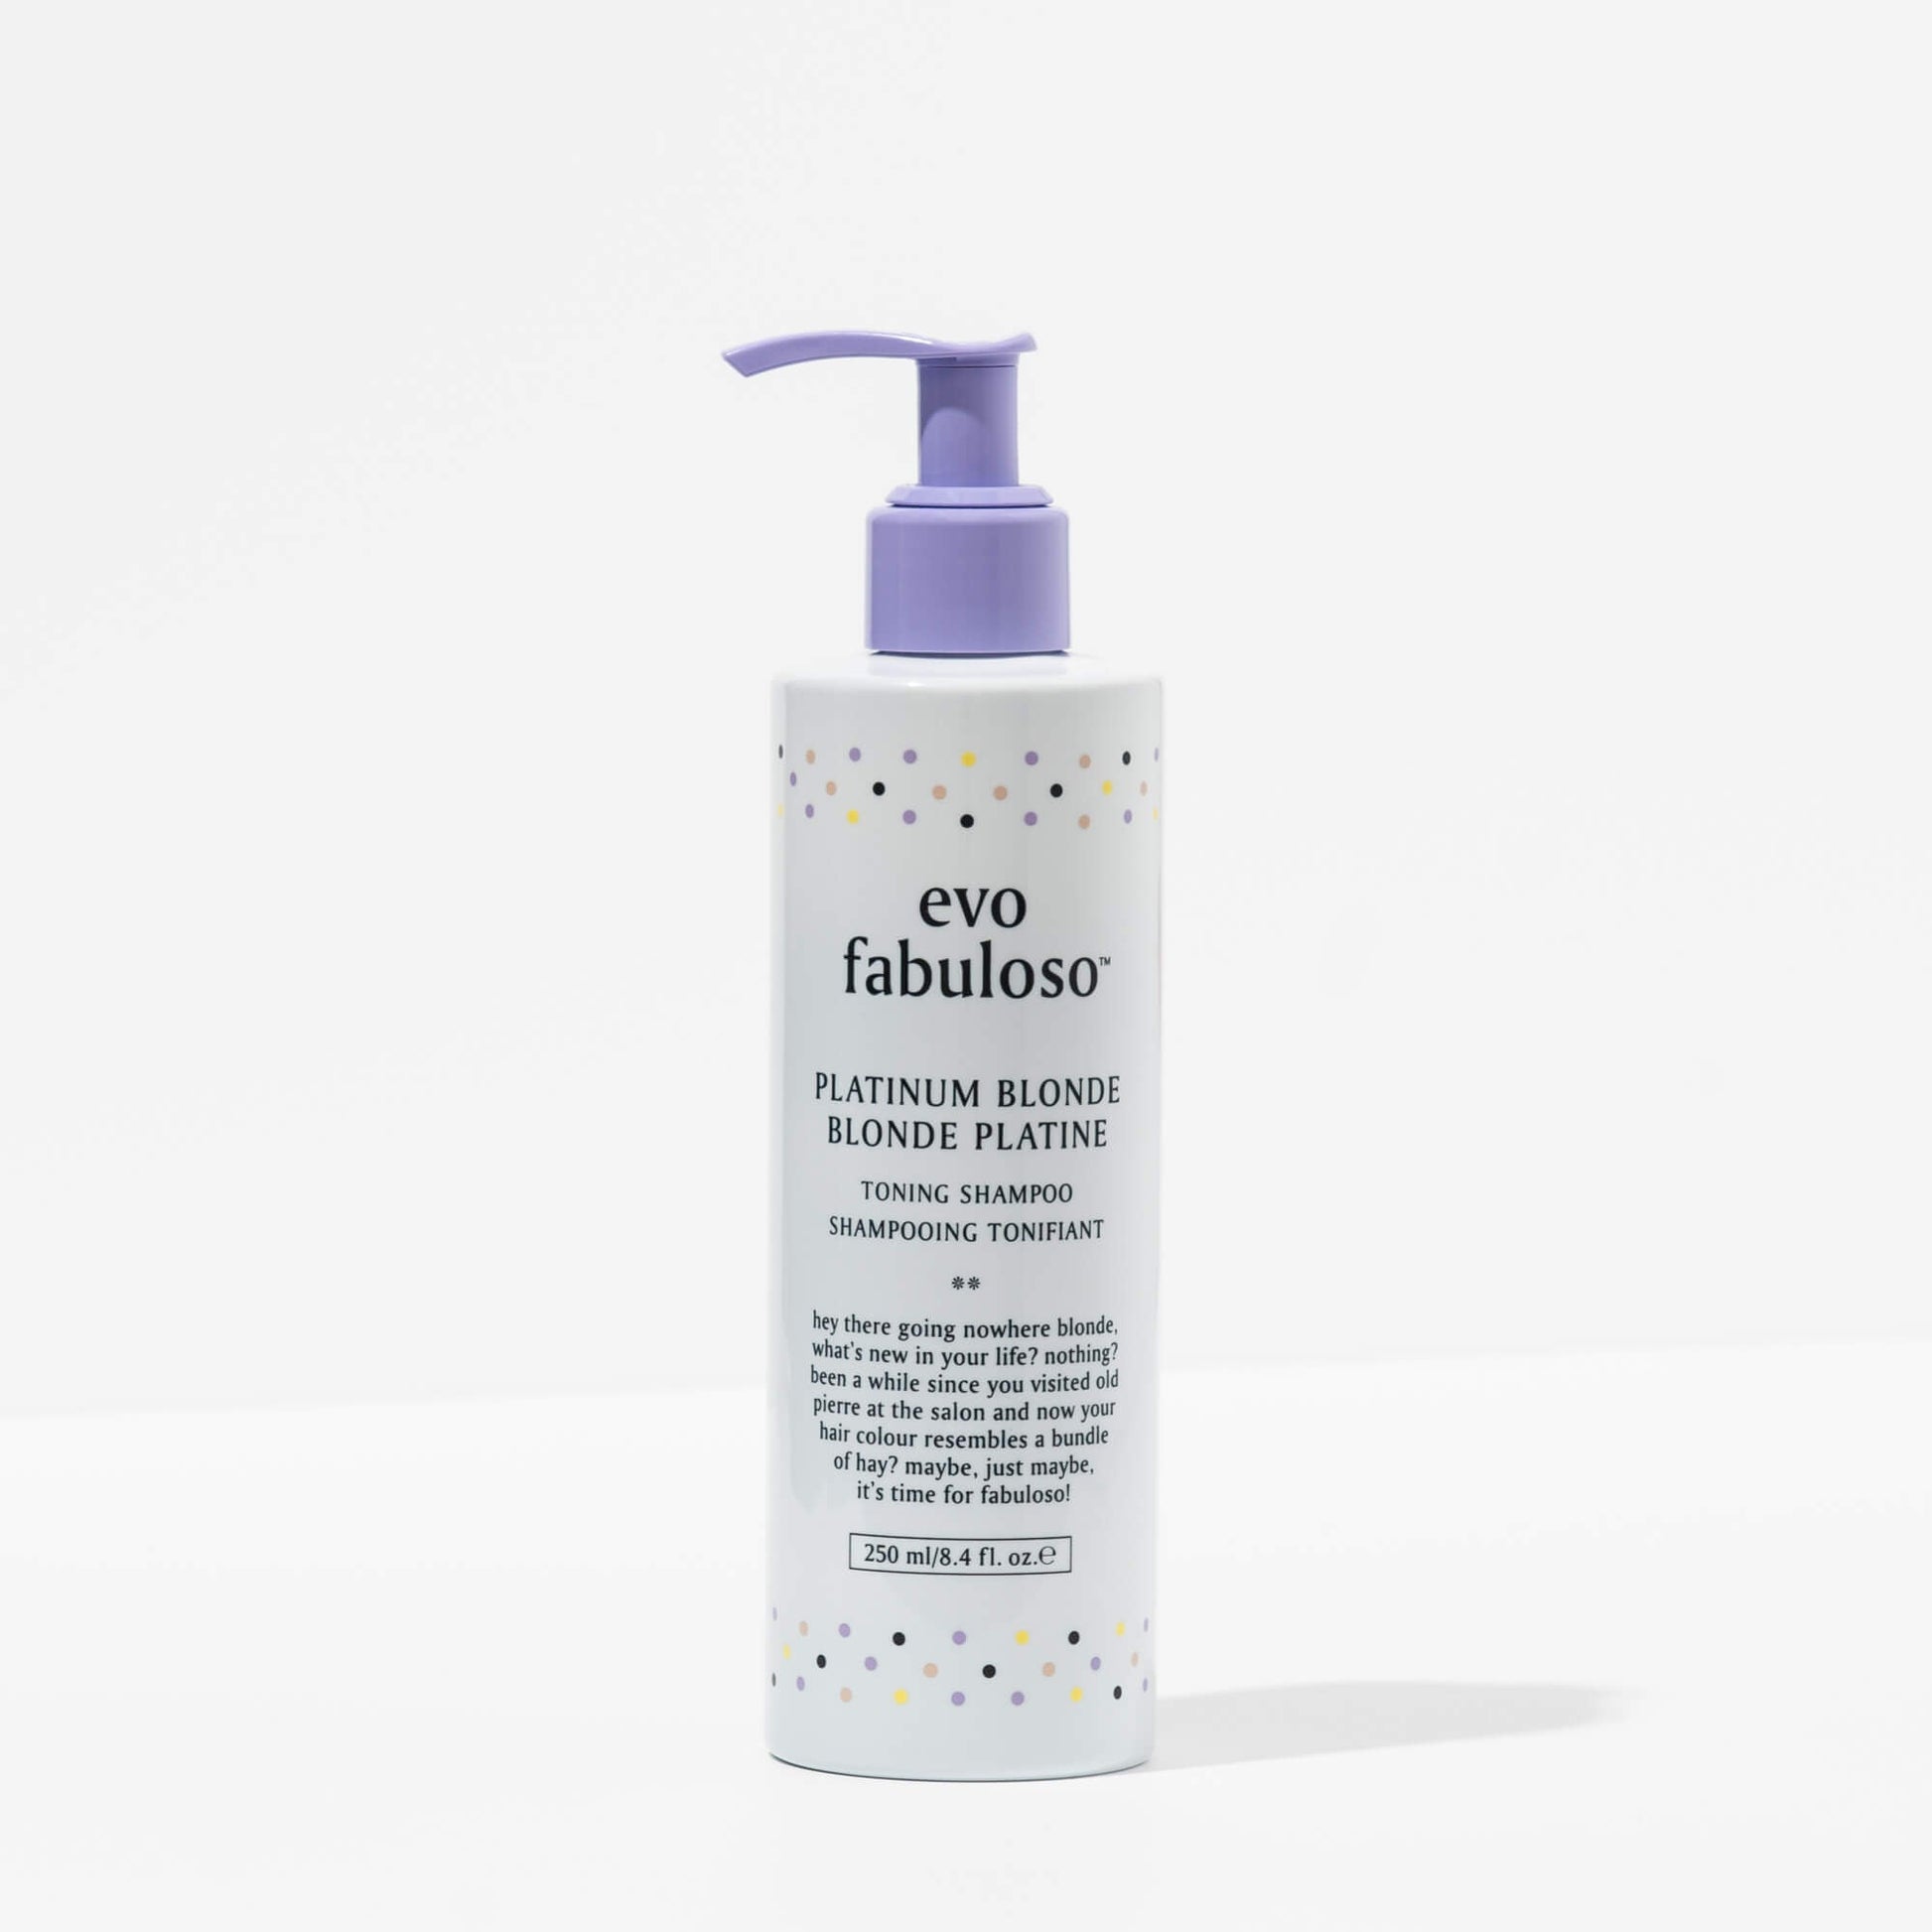 EVO fabuloso platinum blonde toning shampoo 250ml - shelley and co